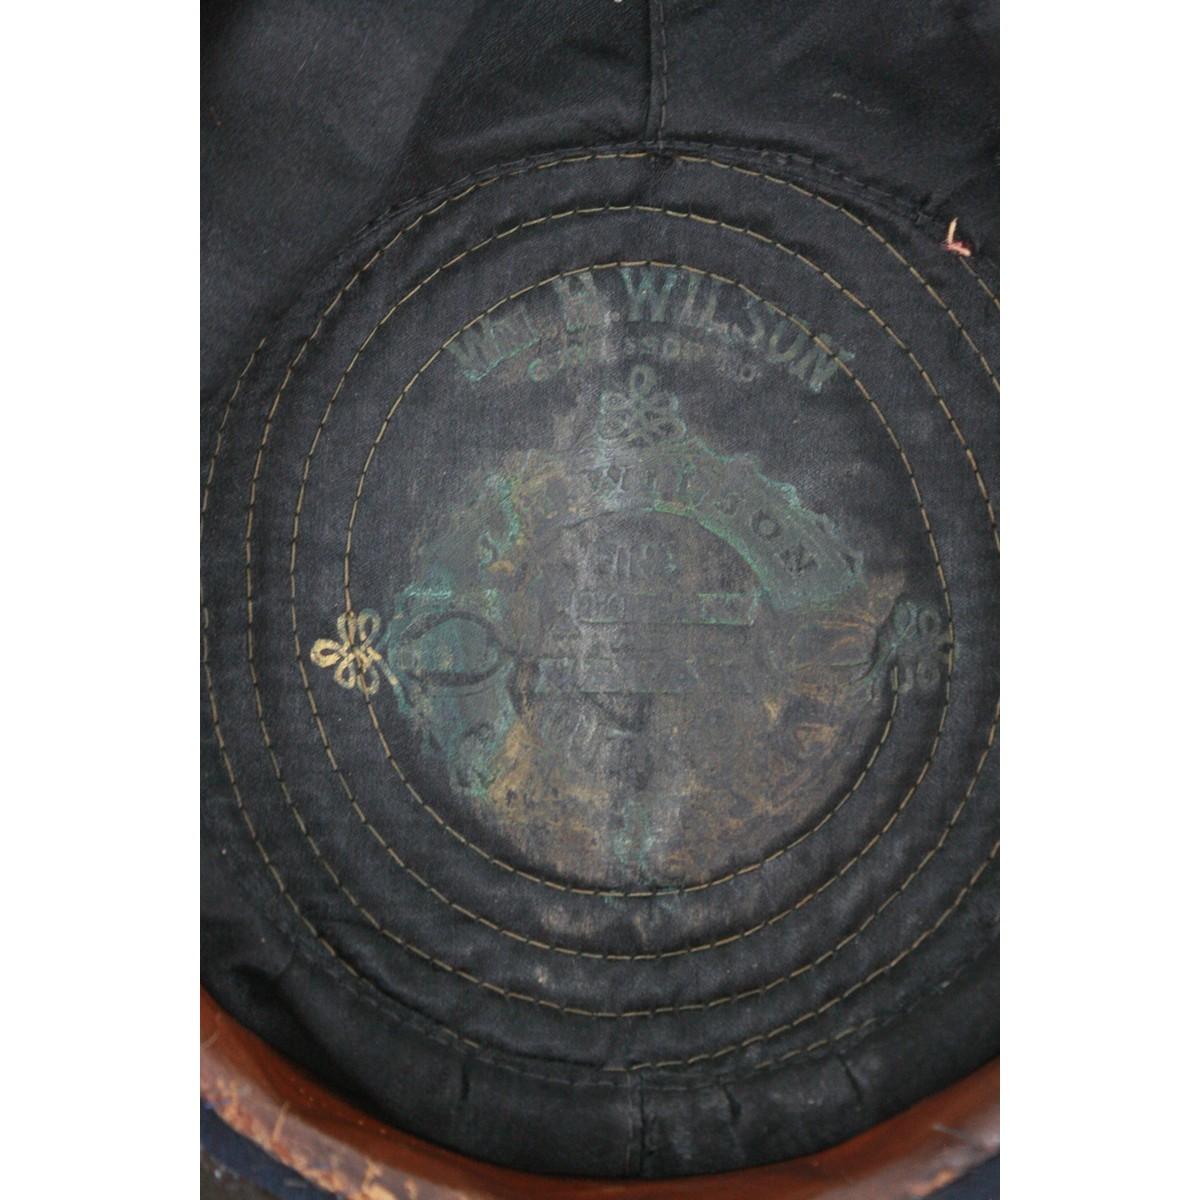 Civil War-Style Kepi Hats (2)